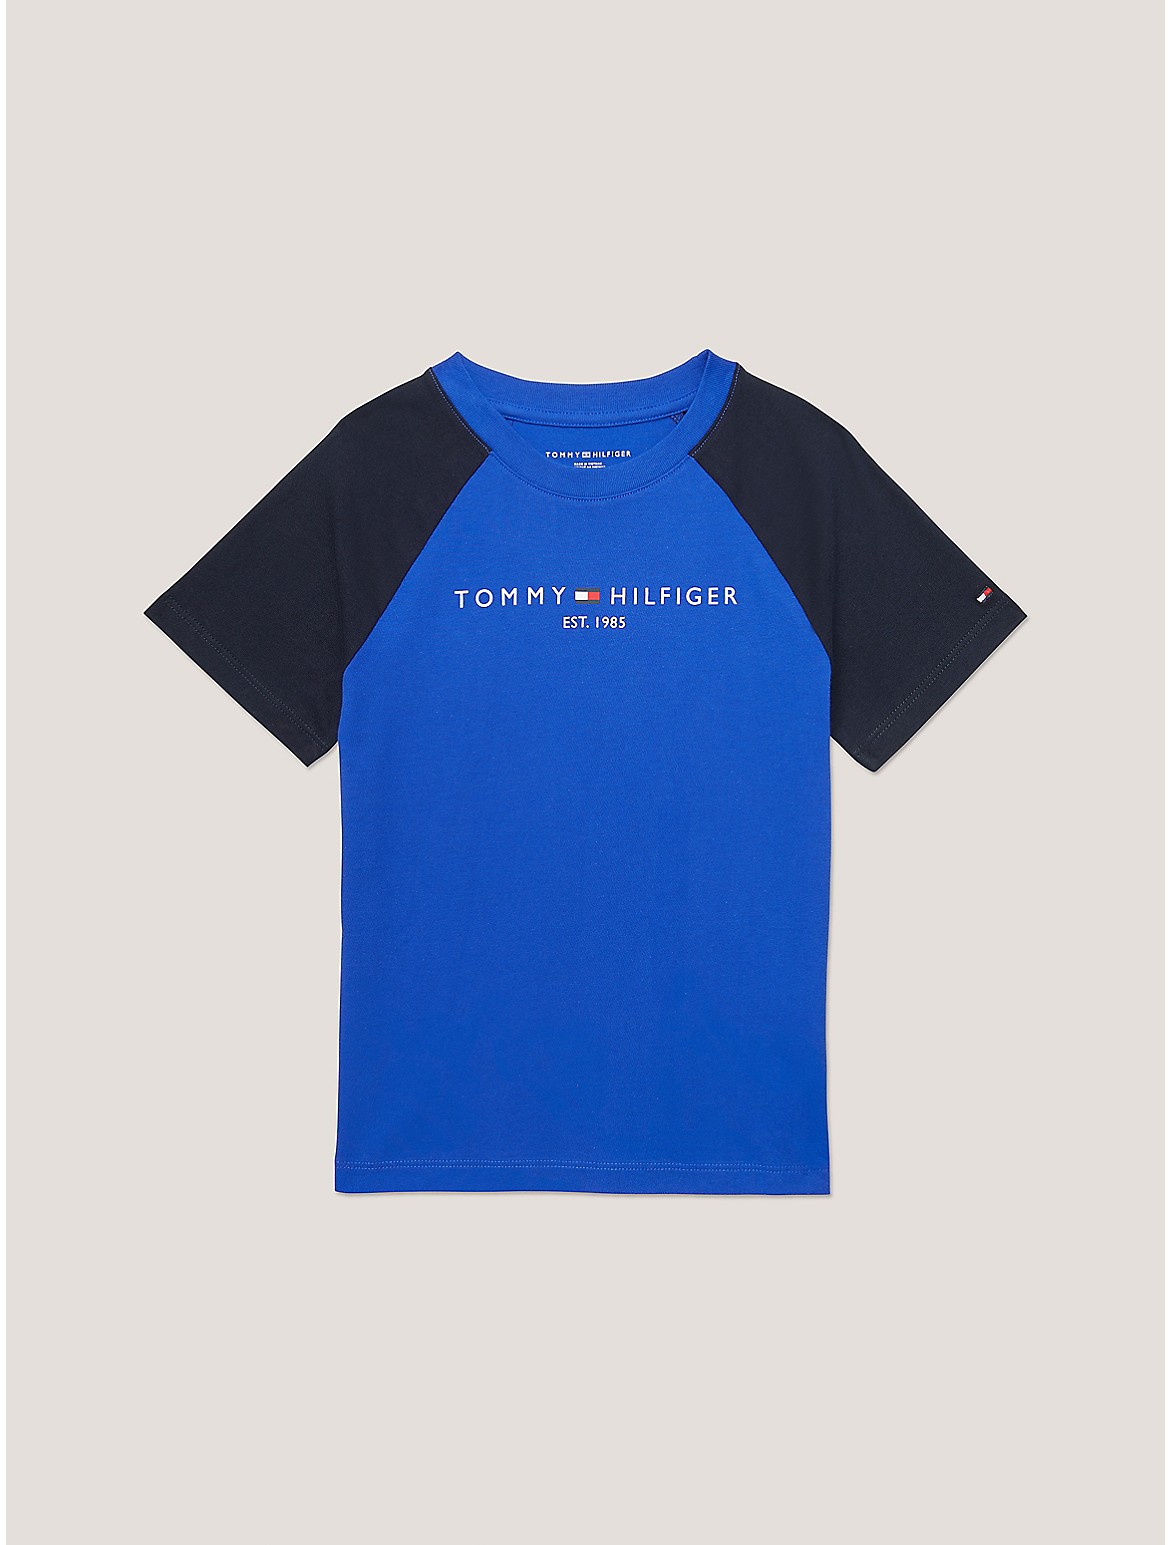 Tommy Hilfiger Boys' Kids' Baseball T-Shirt - Blue - XL